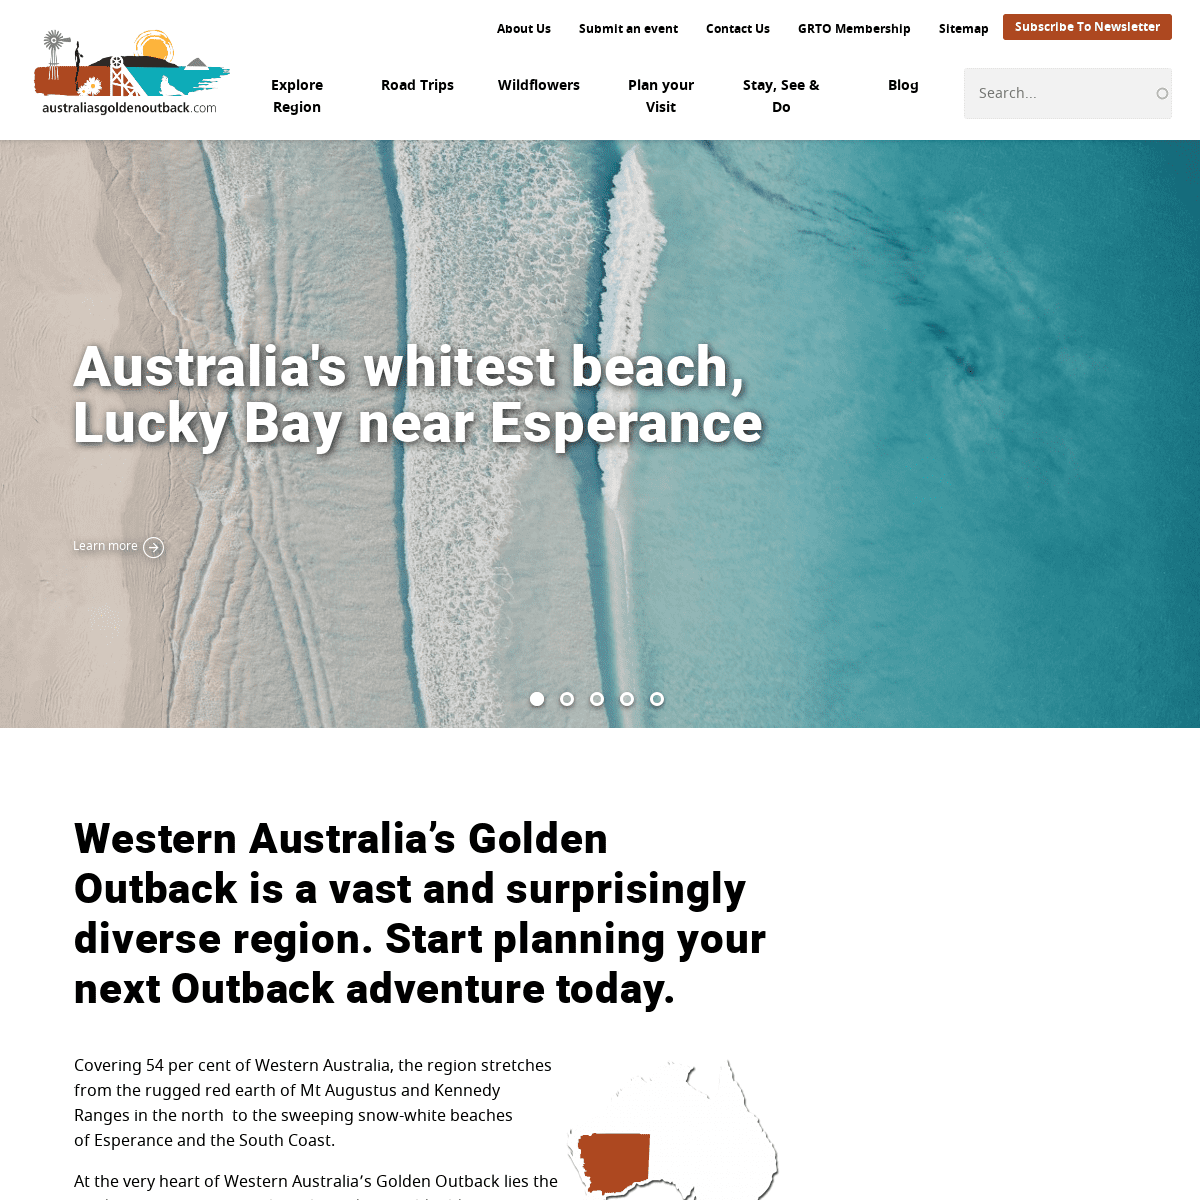 A complete backup of australiasgoldenoutback.com